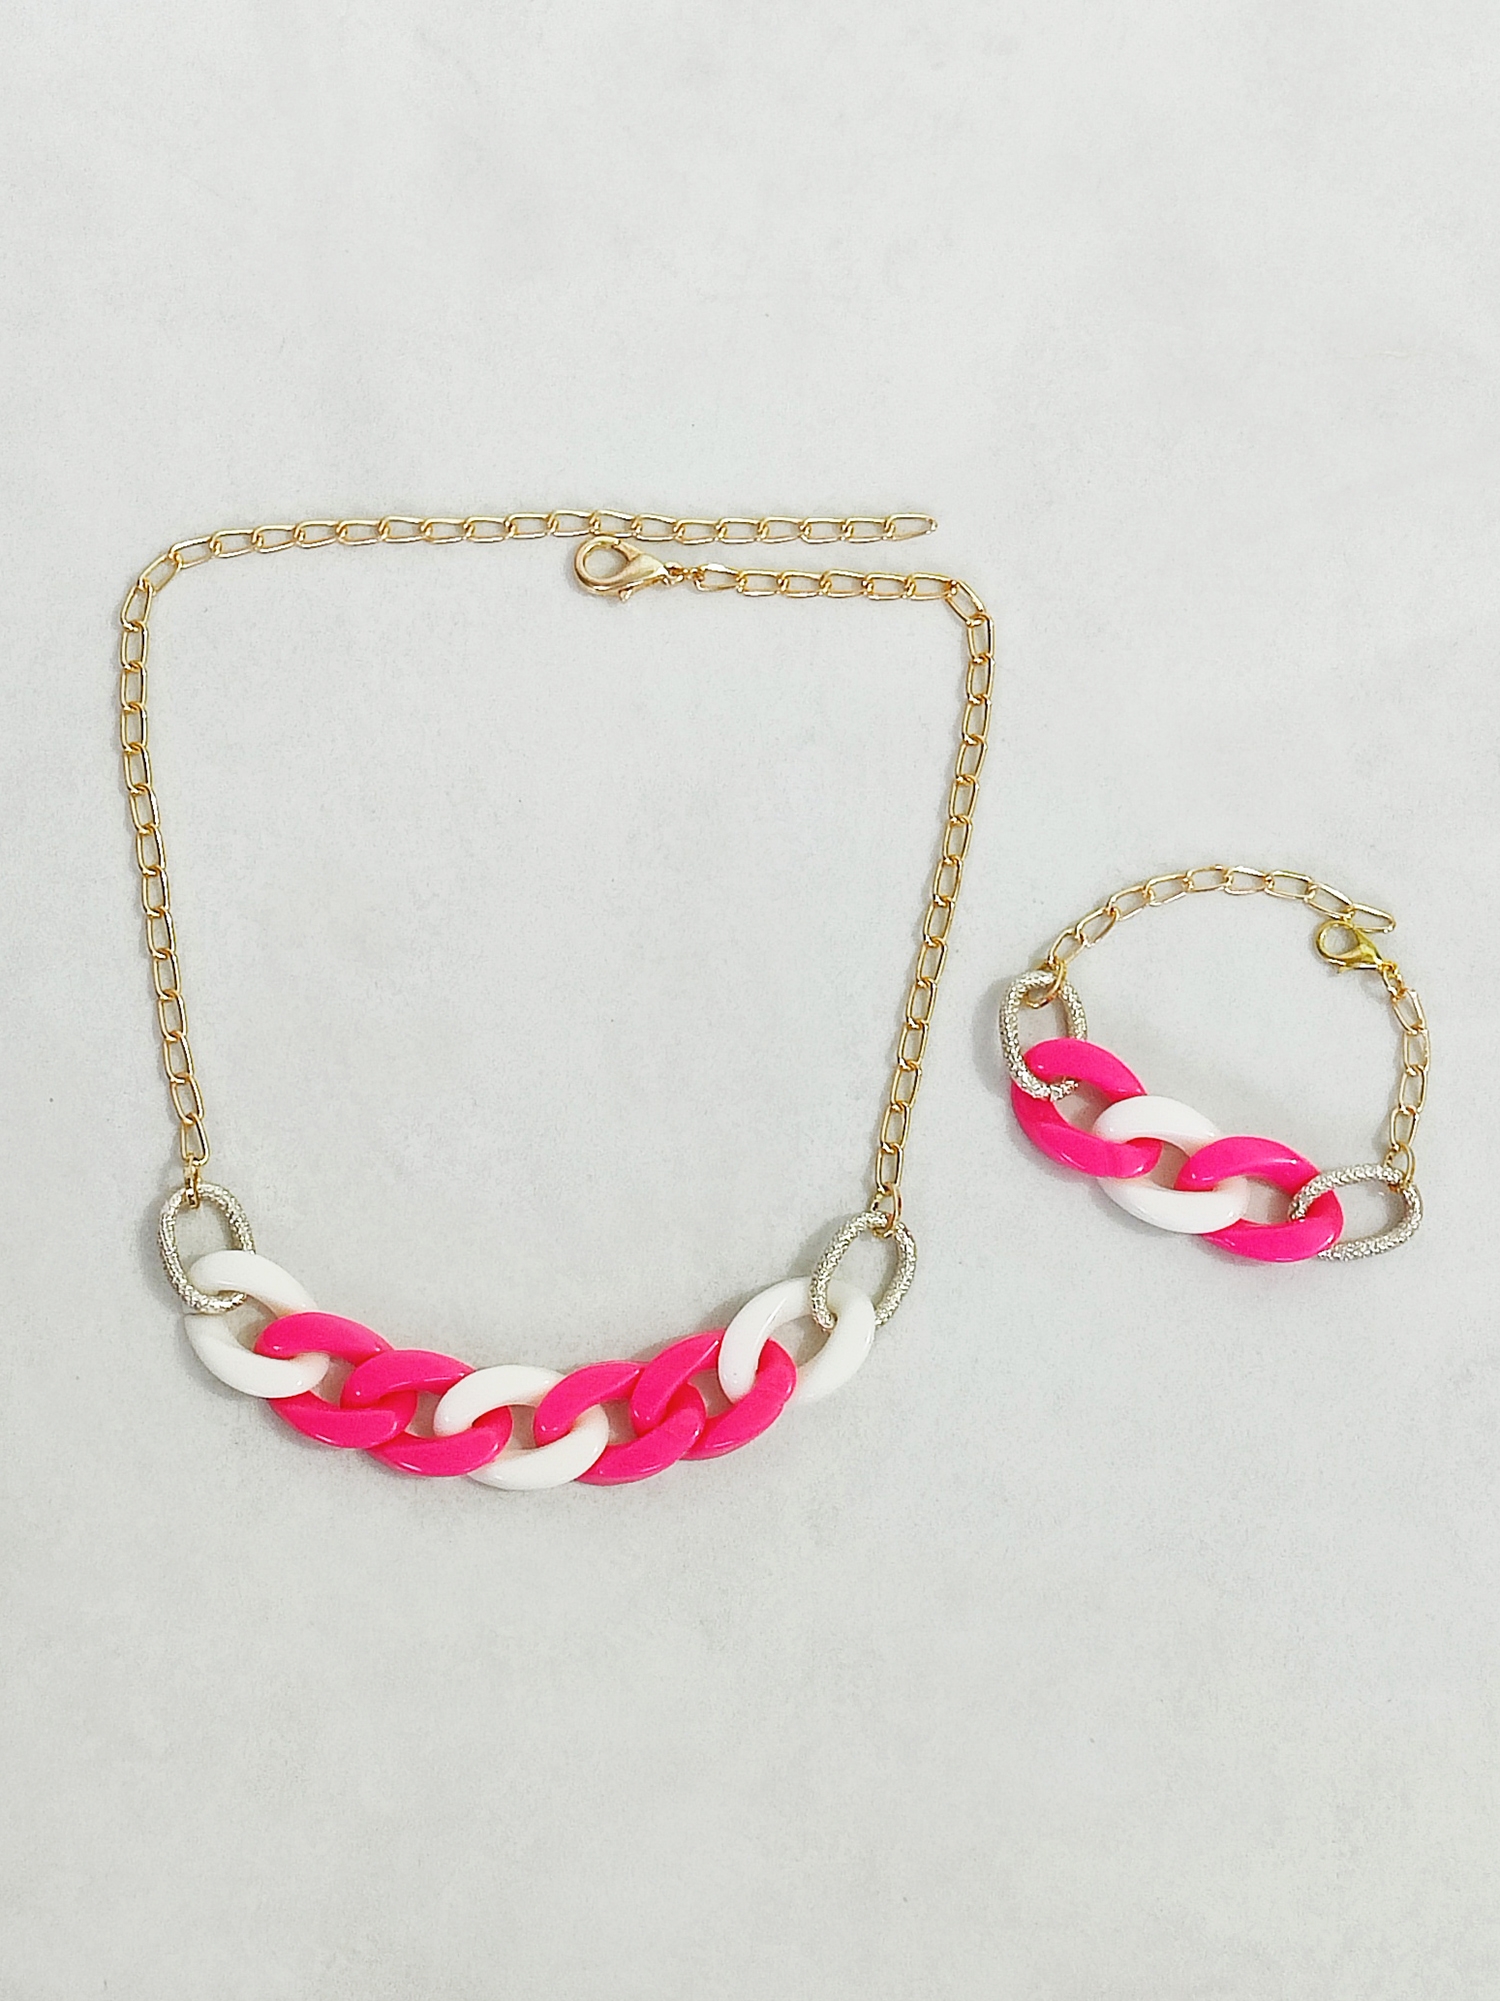 Cotton Candy Link Necklace & Bracelet Set- Pink, White